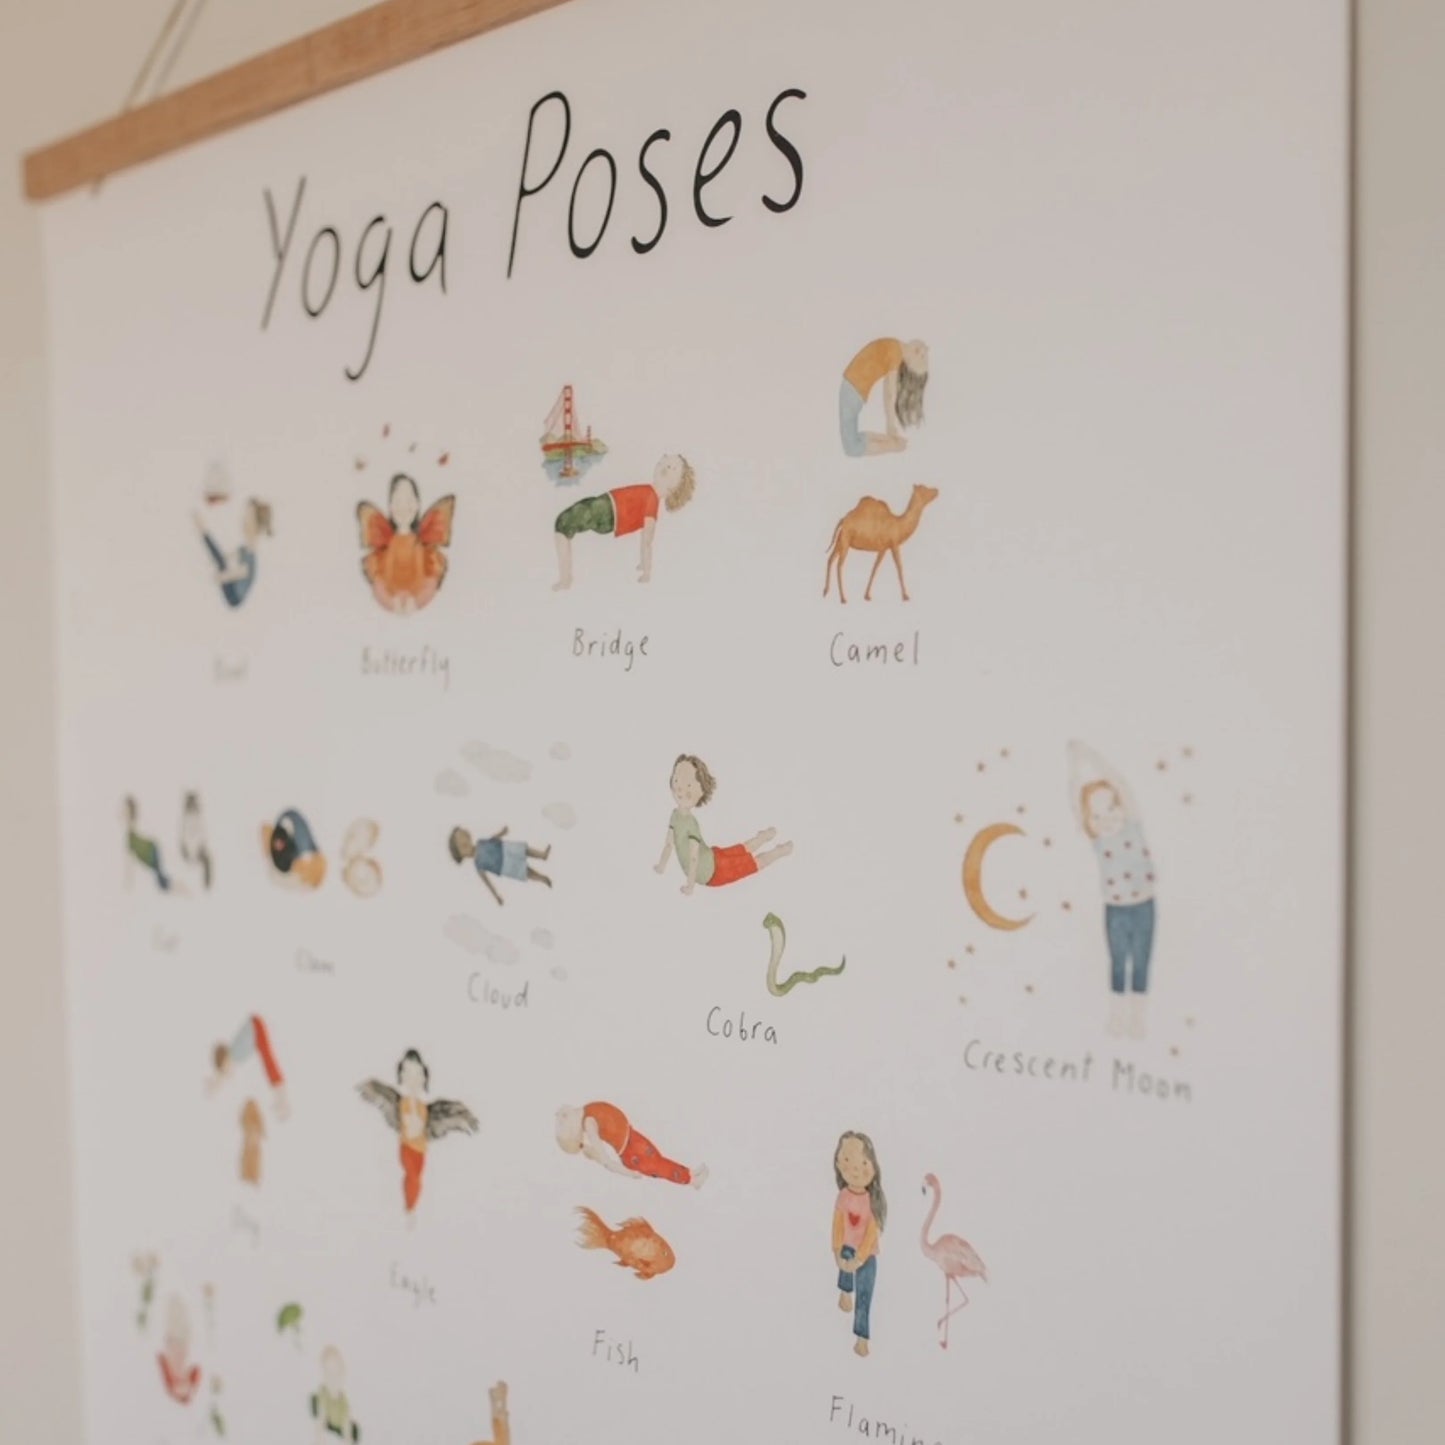 Yoga Poses Print